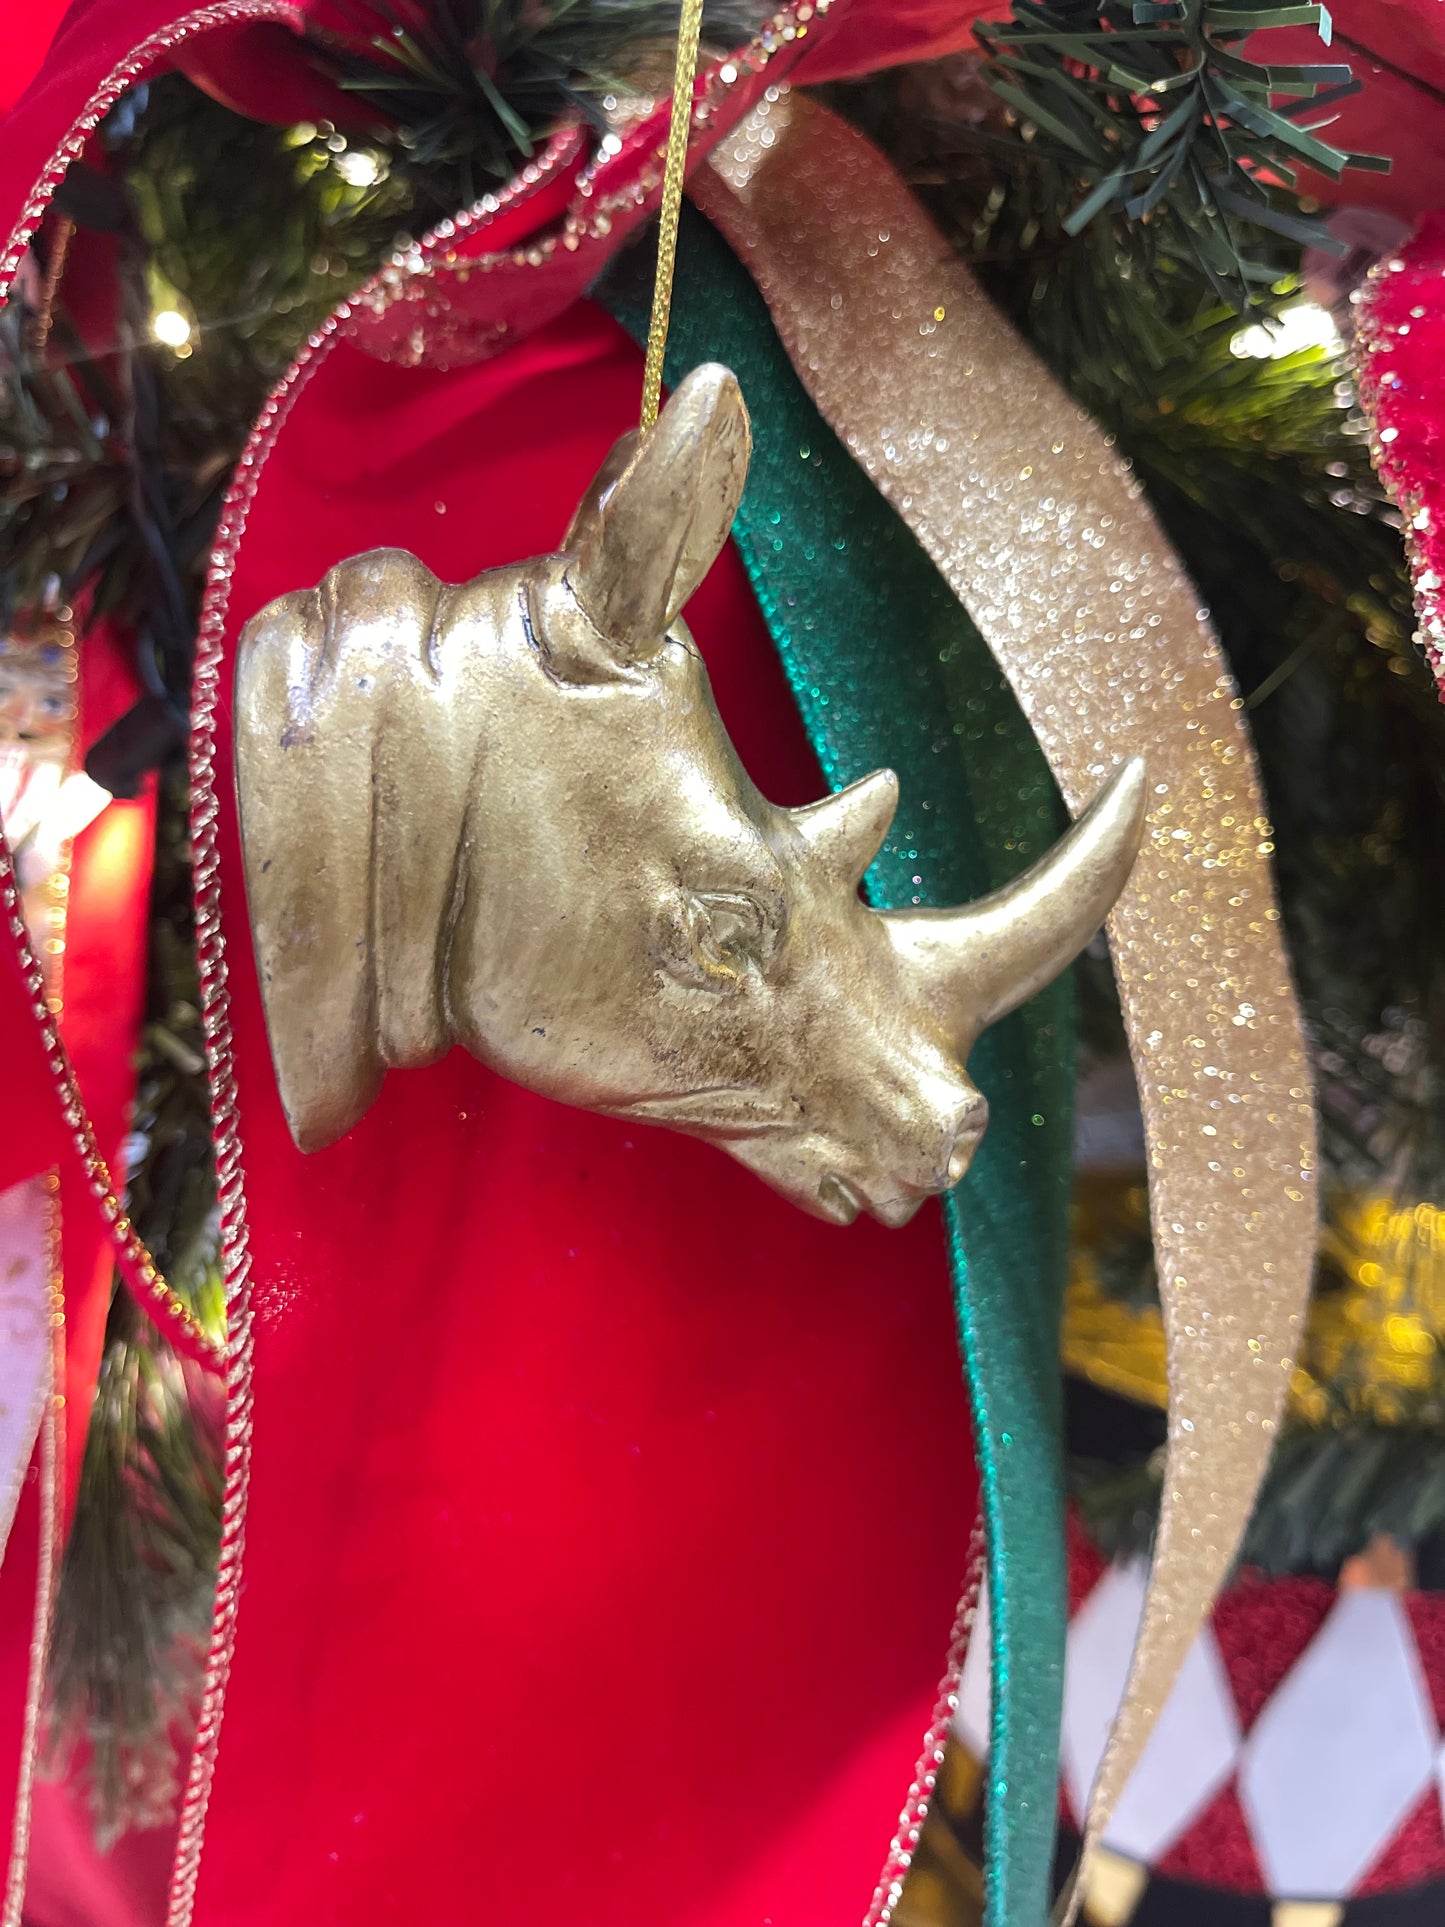 Bronze Metallic Rhino Head Ornament